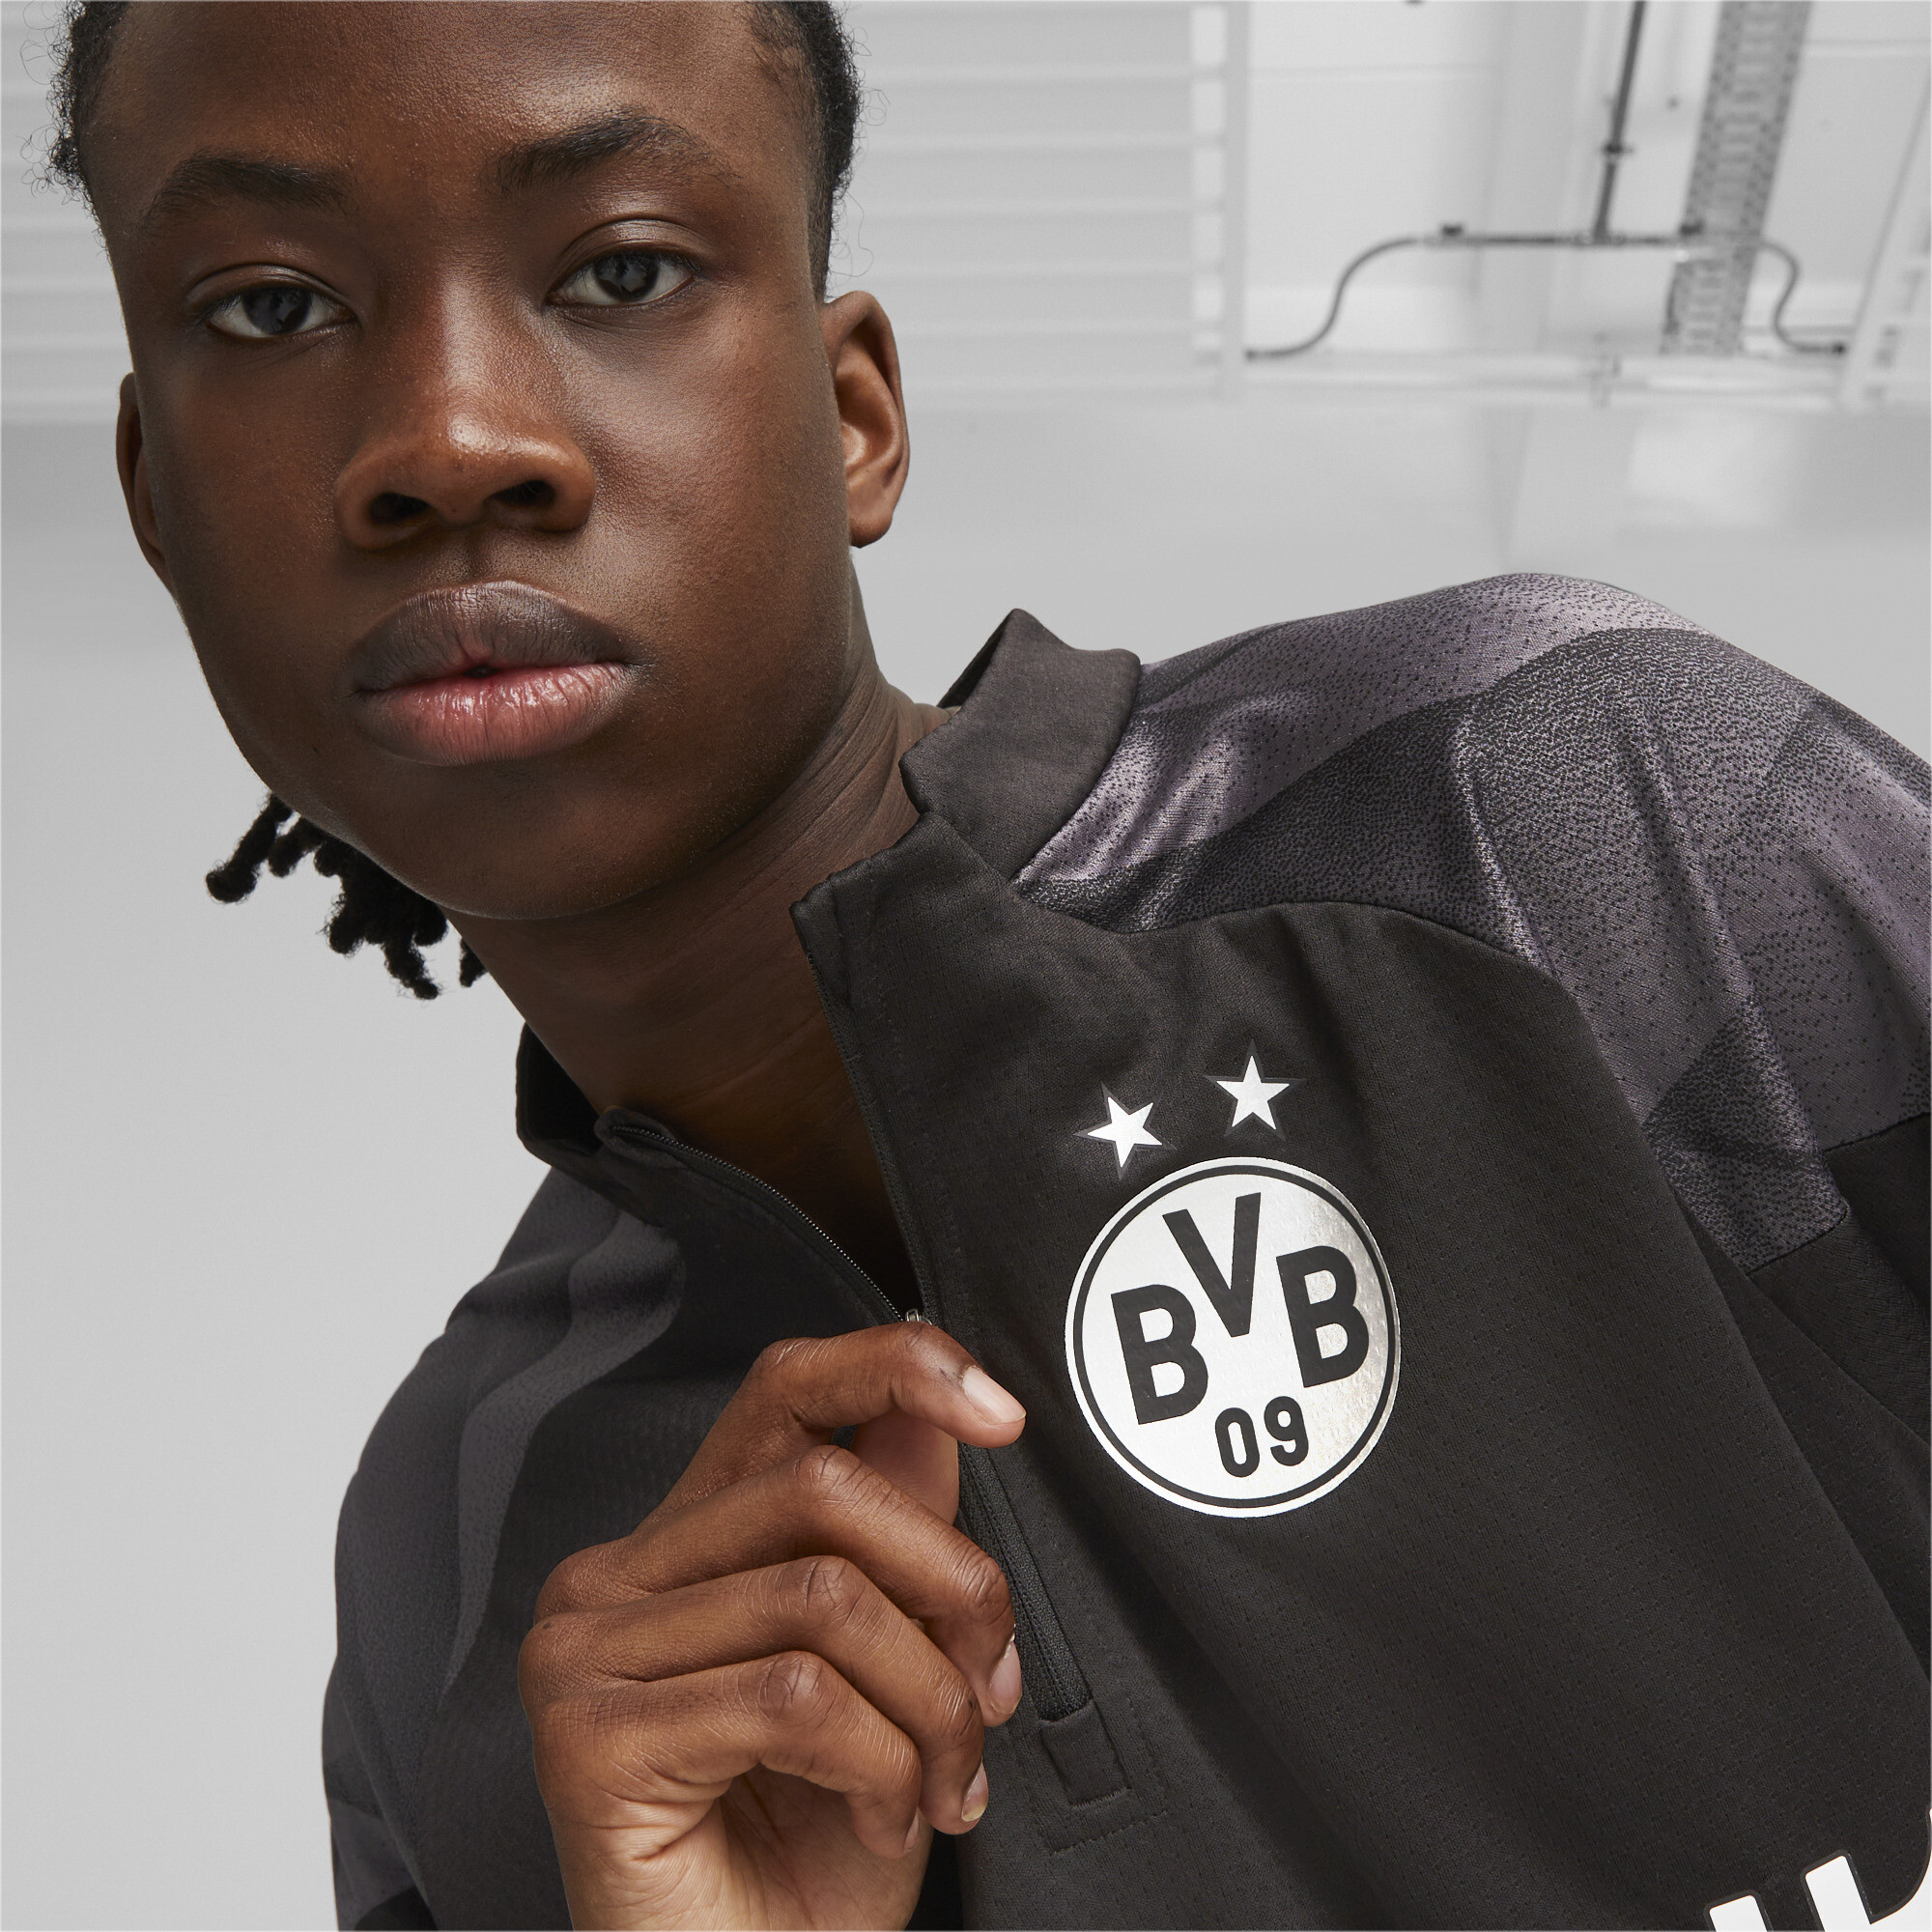 Men's Puma Borussia Dortmund Football Training Quarter-zip Top, Black Top, Size 3XL Top, Clothing